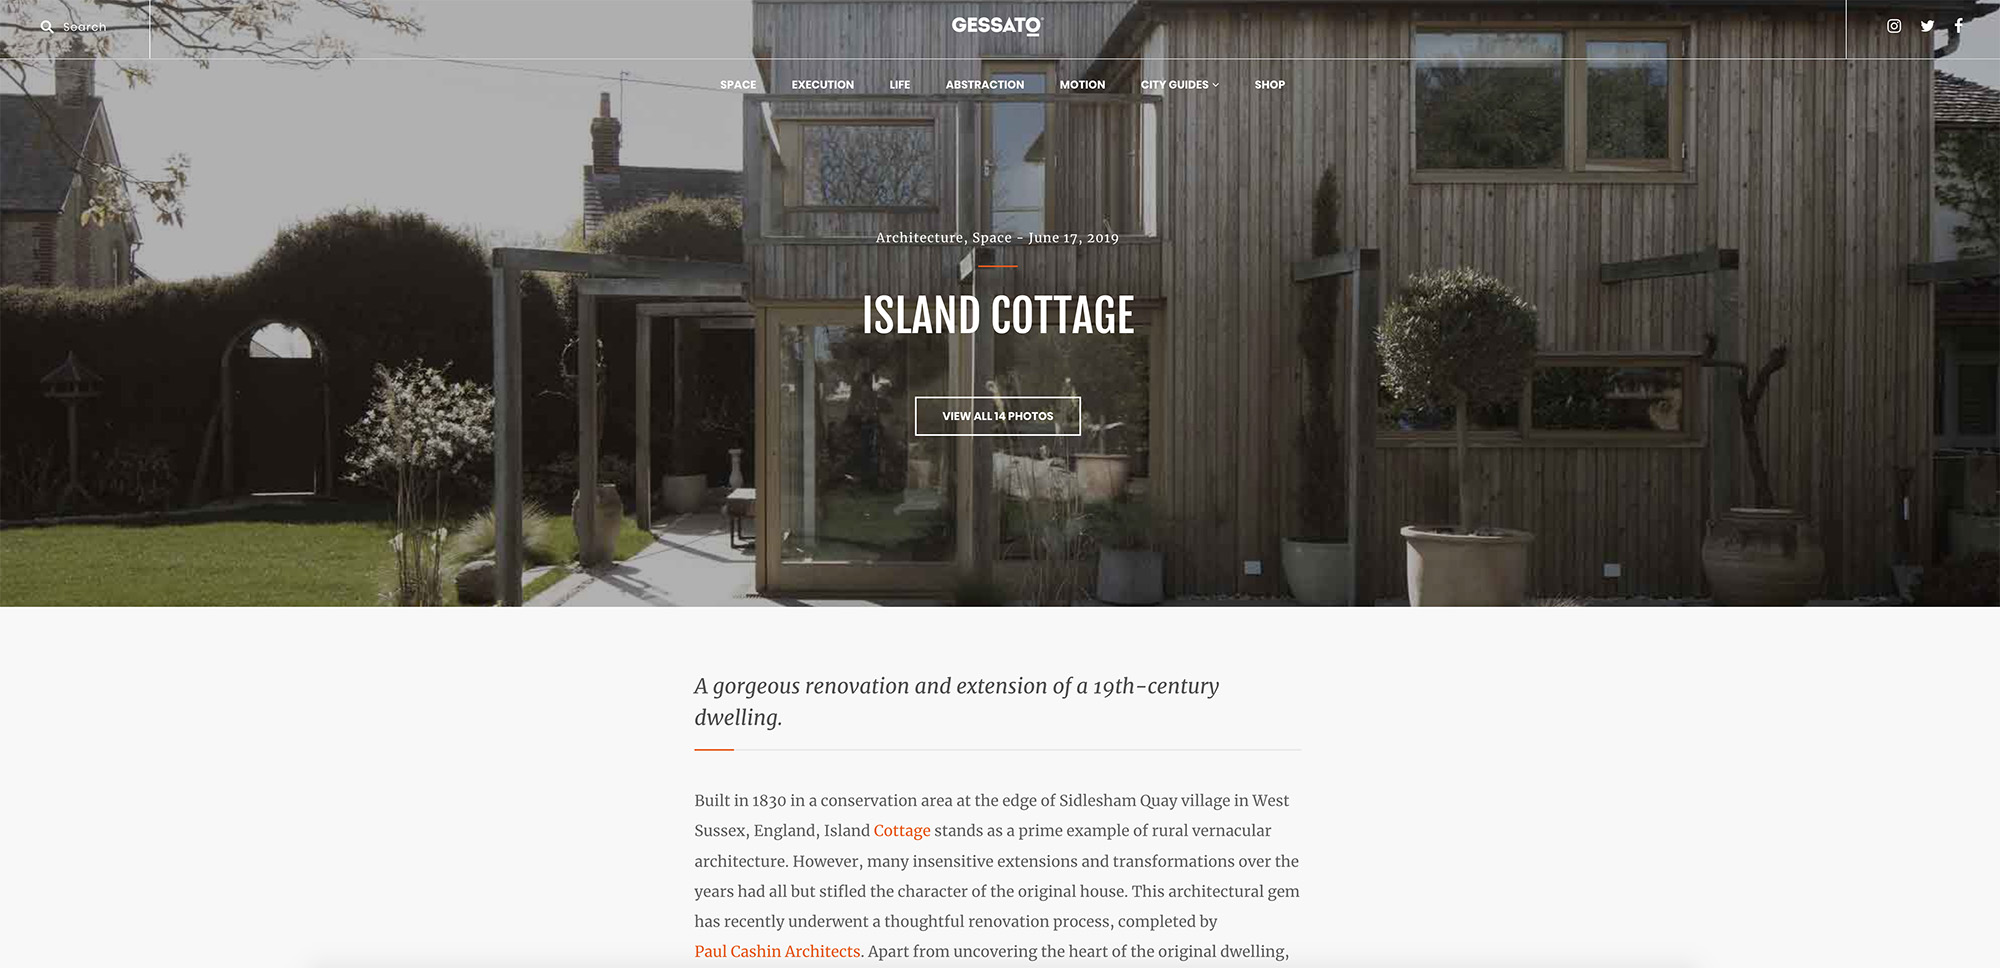 06.19 Island Cottage featured on Gessato